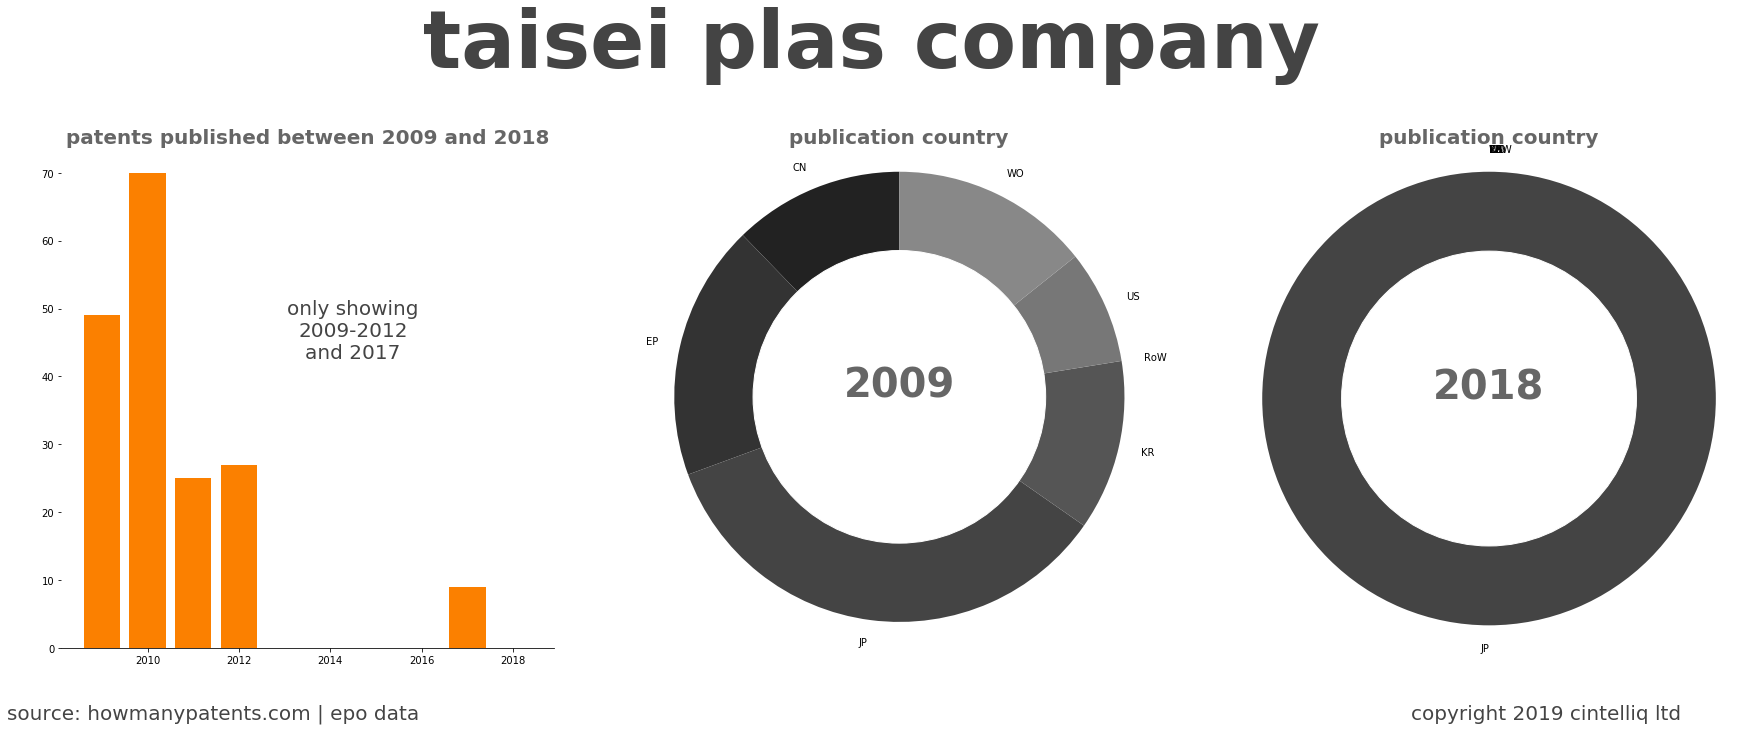 summary of patents for Taisei Plas Company